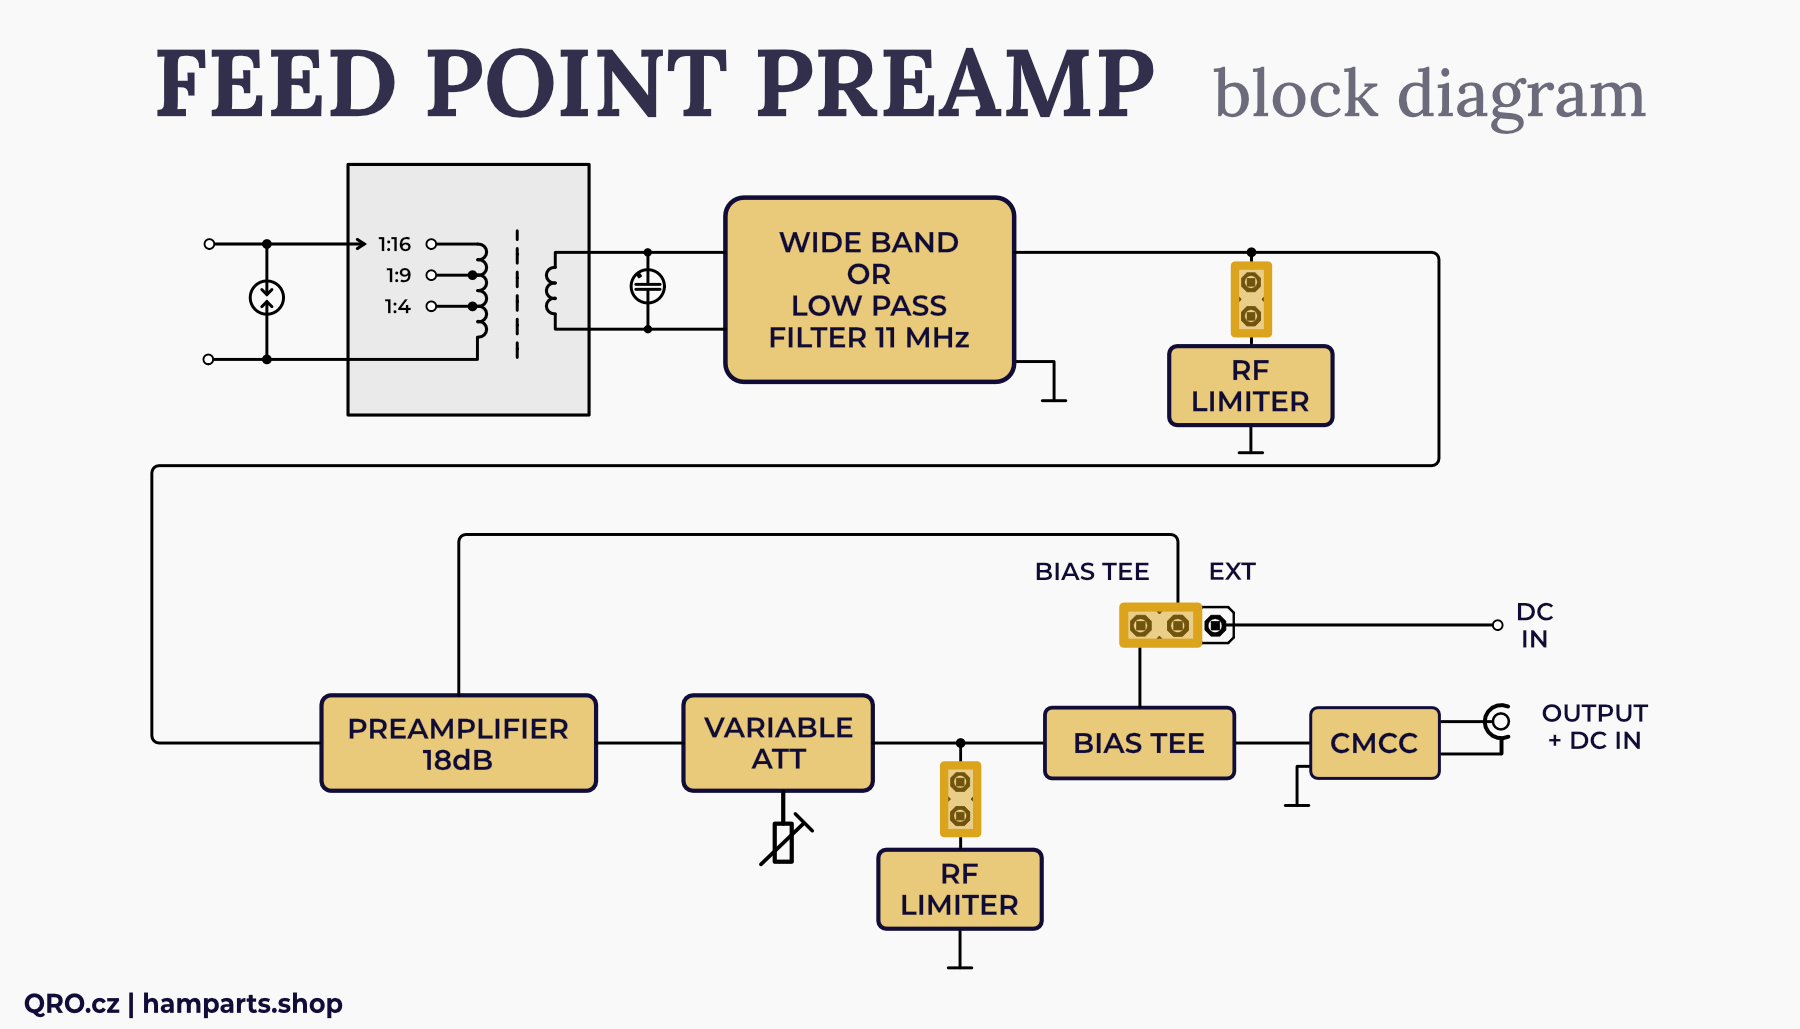 feed point preamp feeder box block diagram by qro.cz hamparts.shop